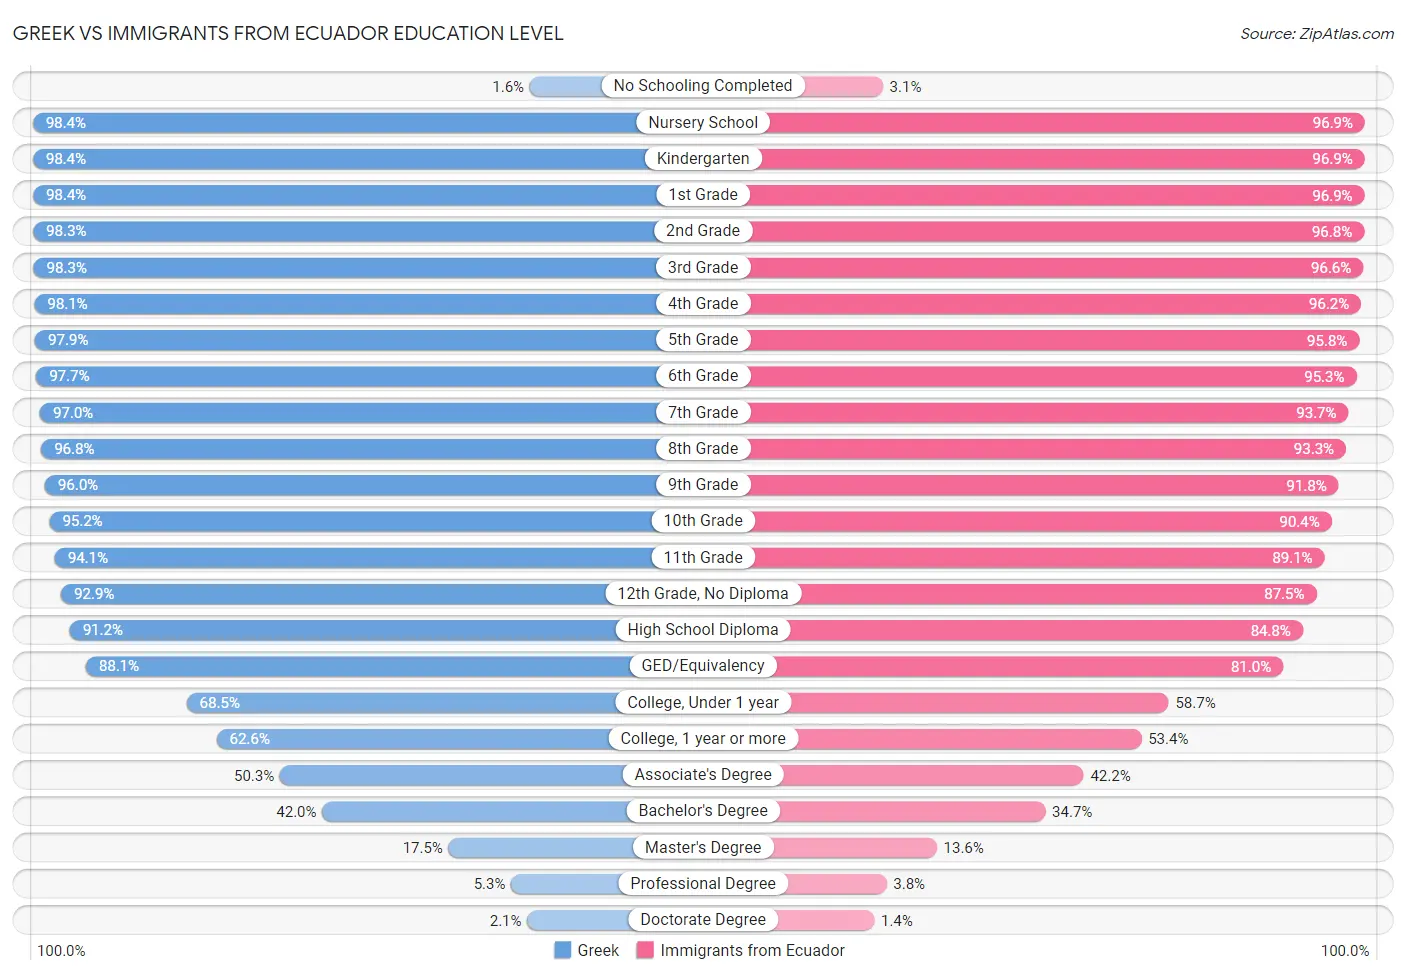 Greek vs Immigrants from Ecuador Education Level